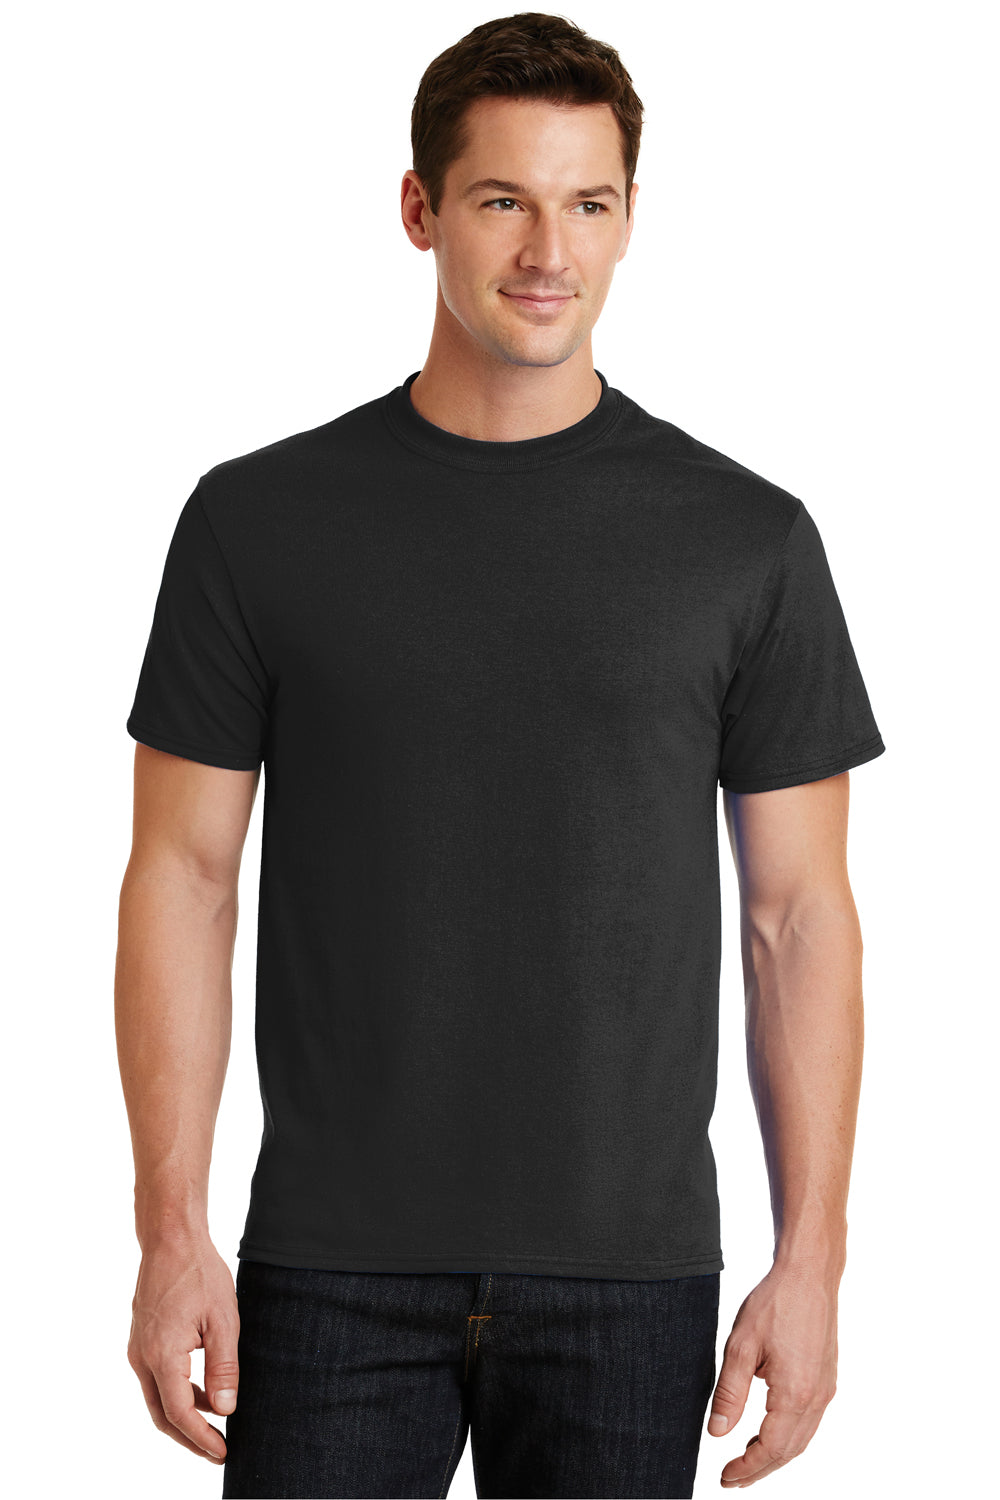 Port & Company PC55 Mens Core Short Sleeve Crewneck T-Shirt Black Front